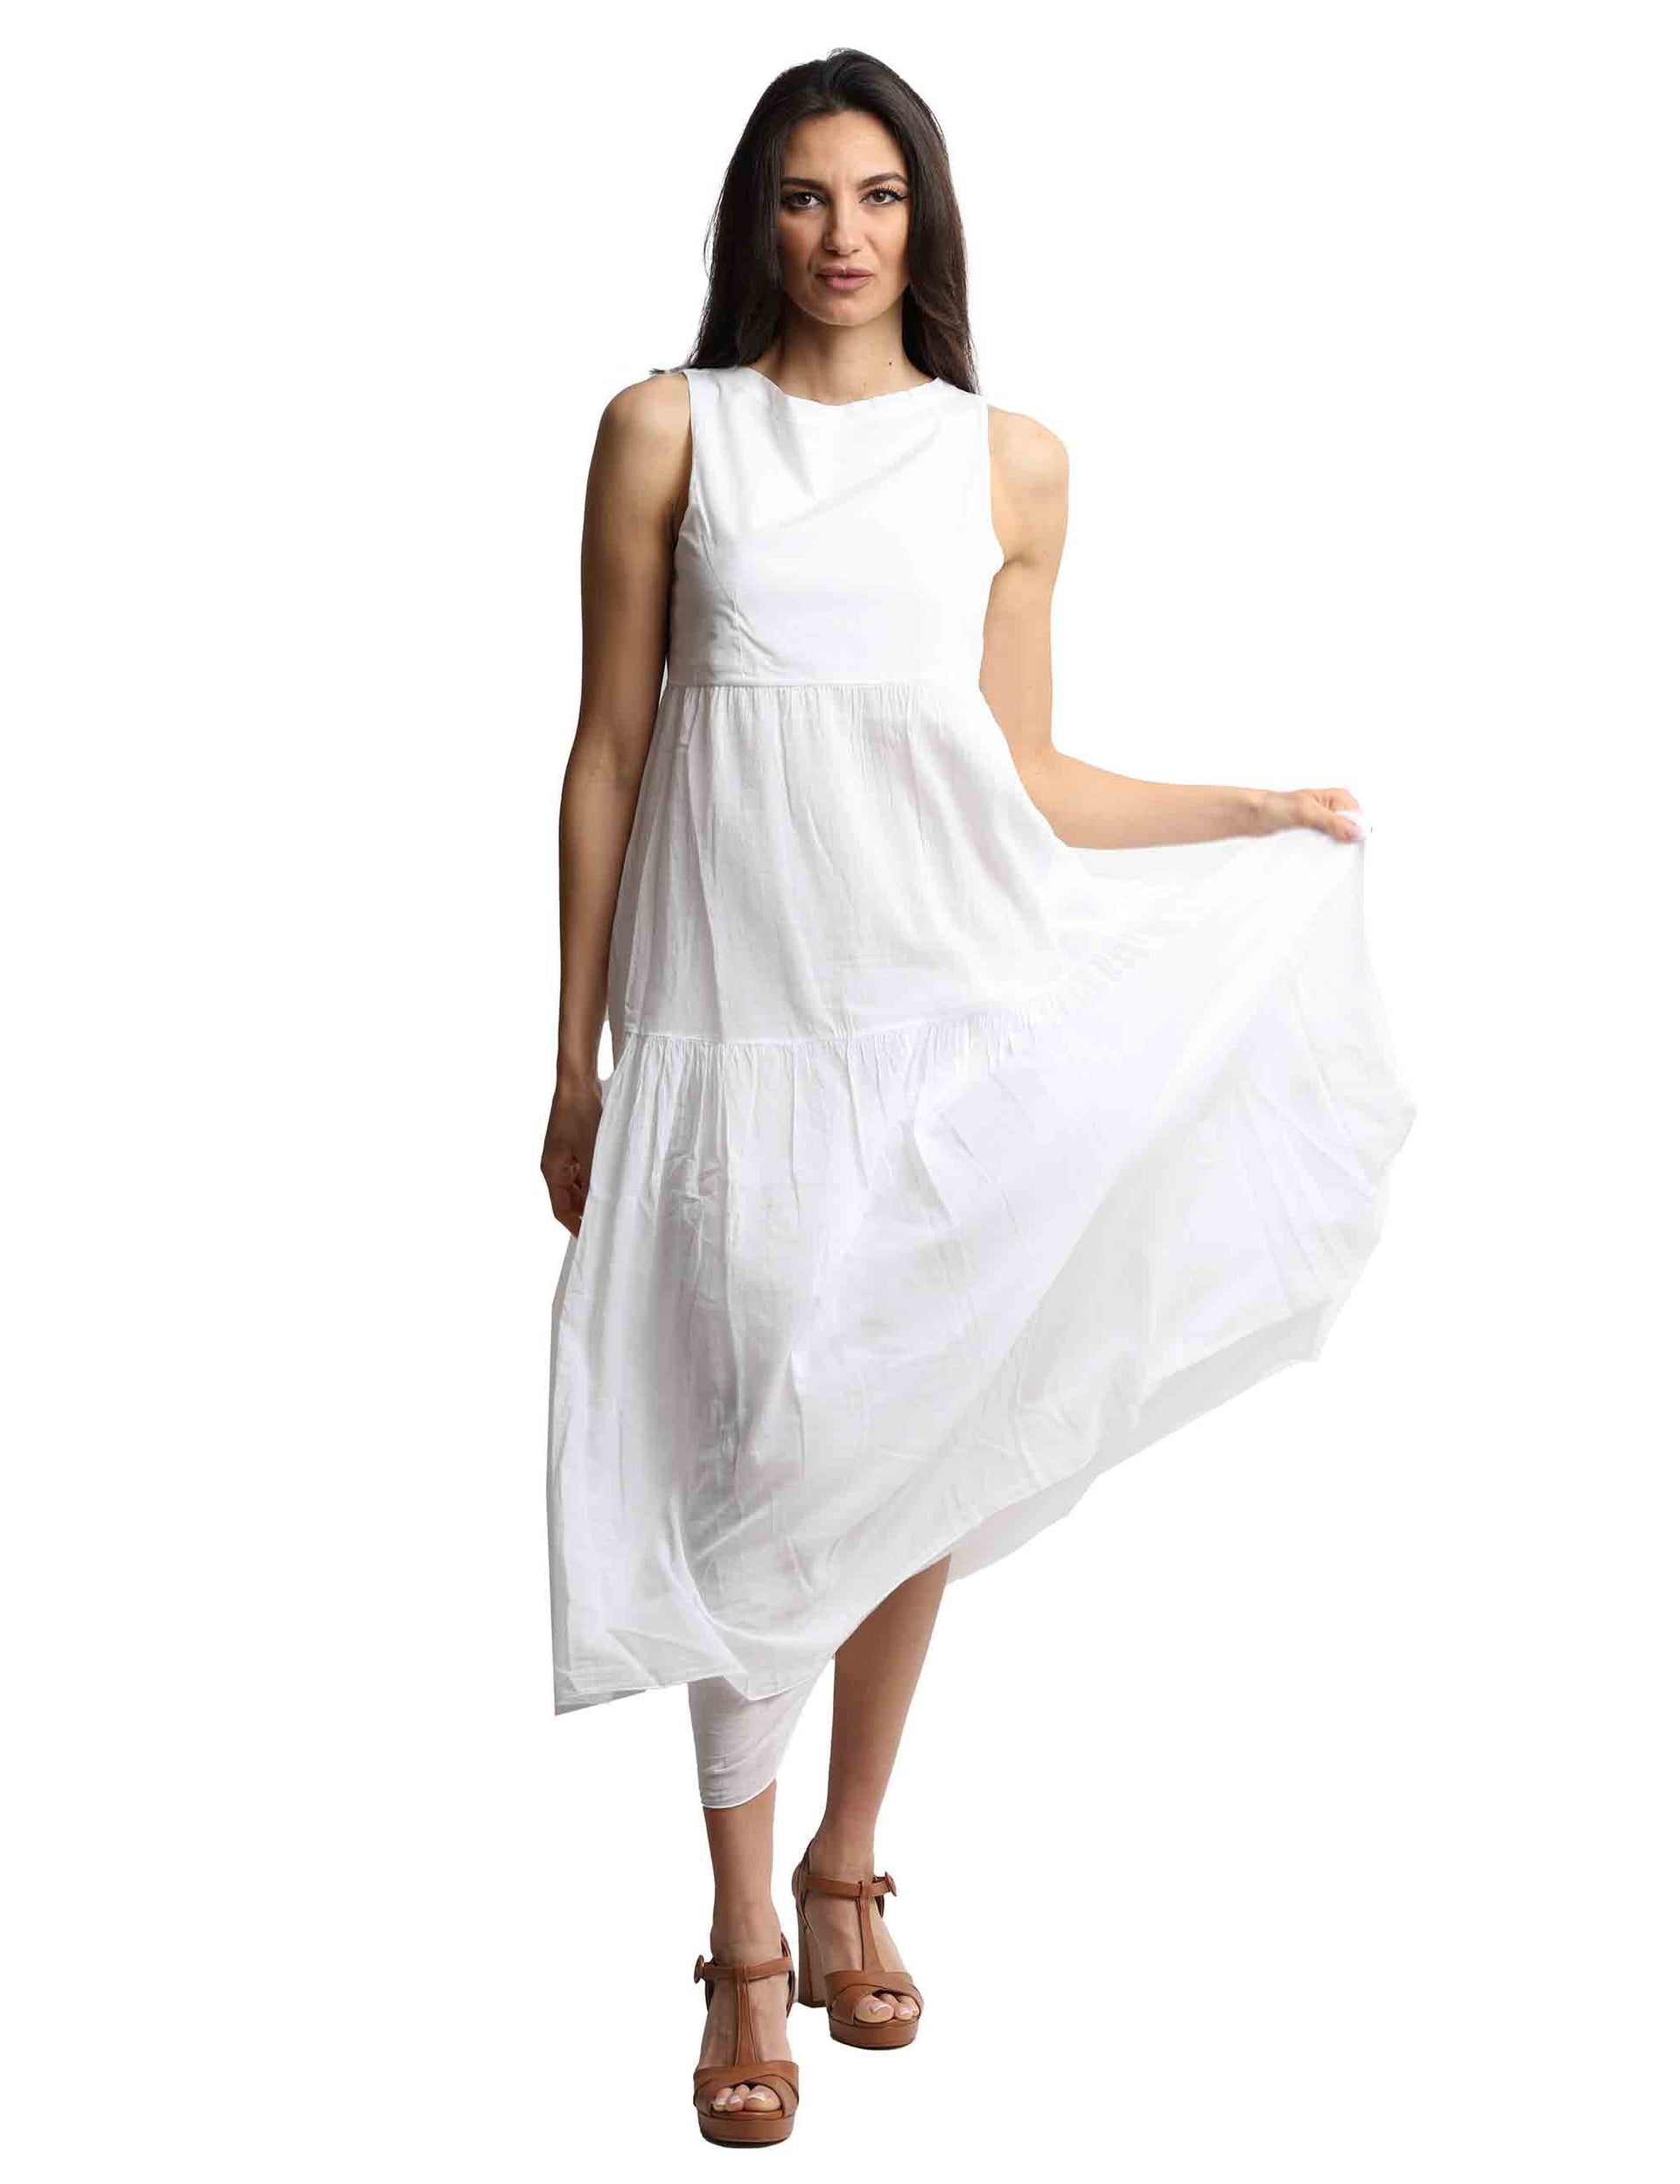 Long women's dresses in white cotton